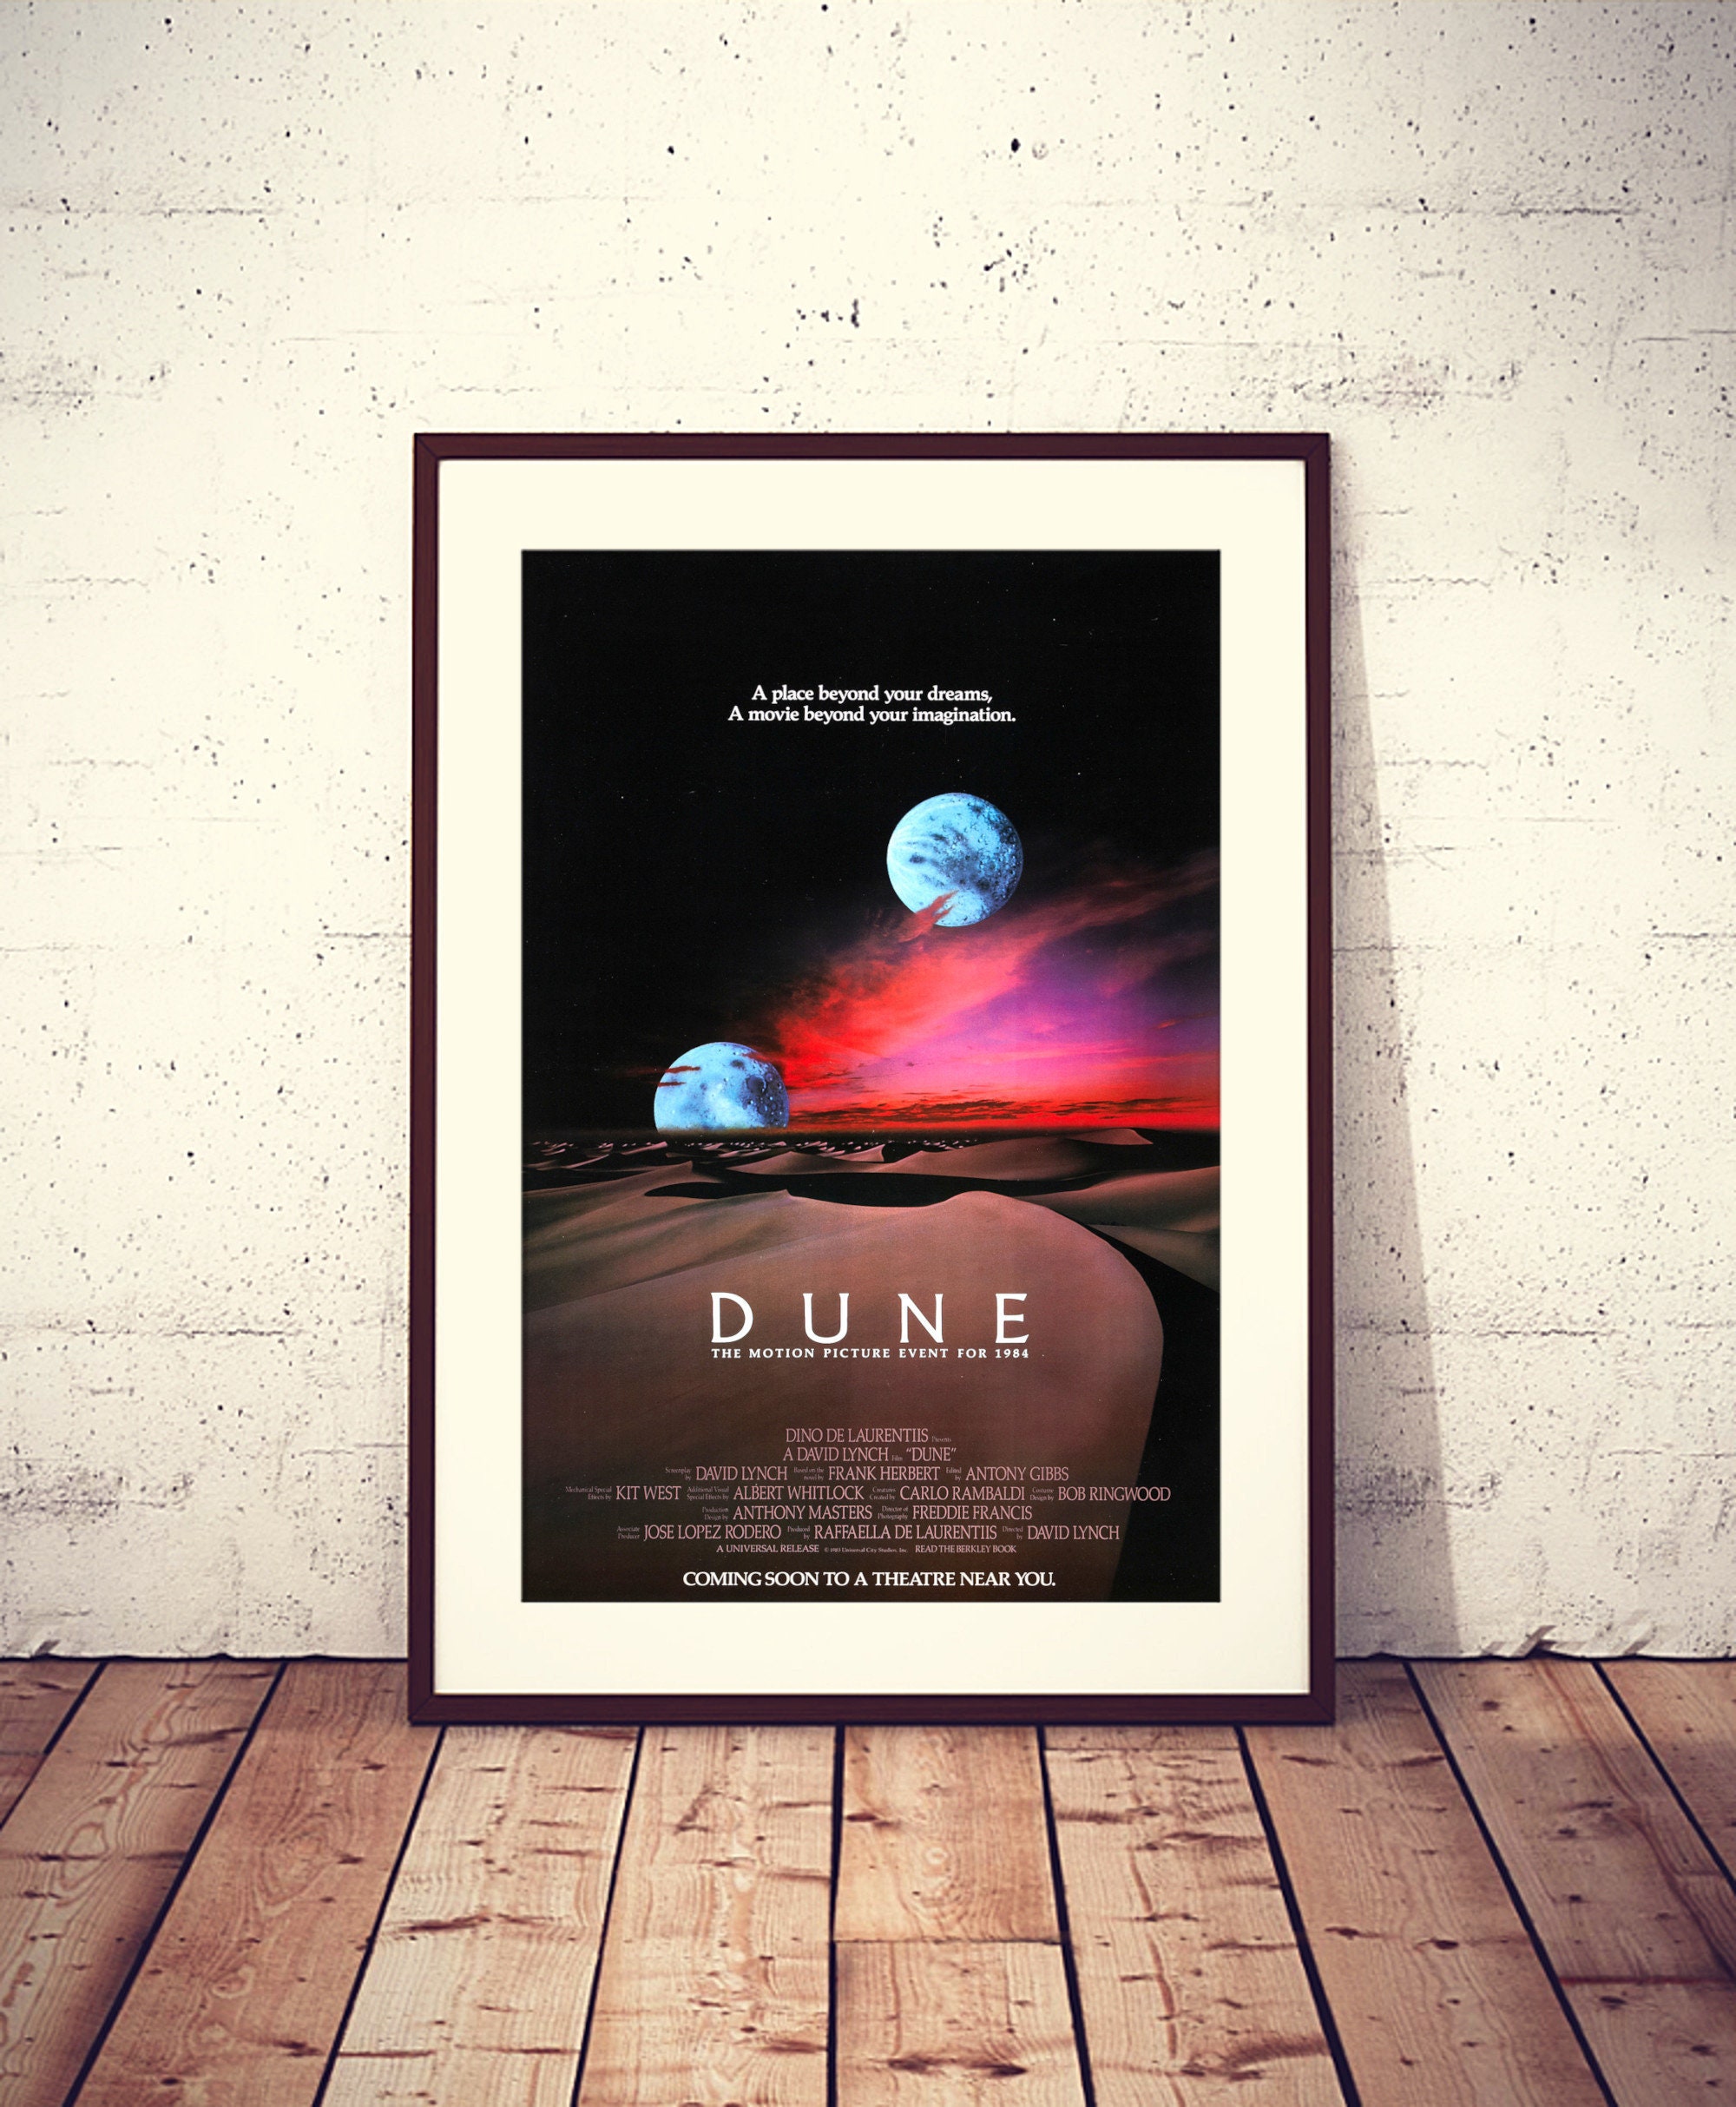 Dune 1984 American Epic Science Fiction Film Original Poster hq nude image